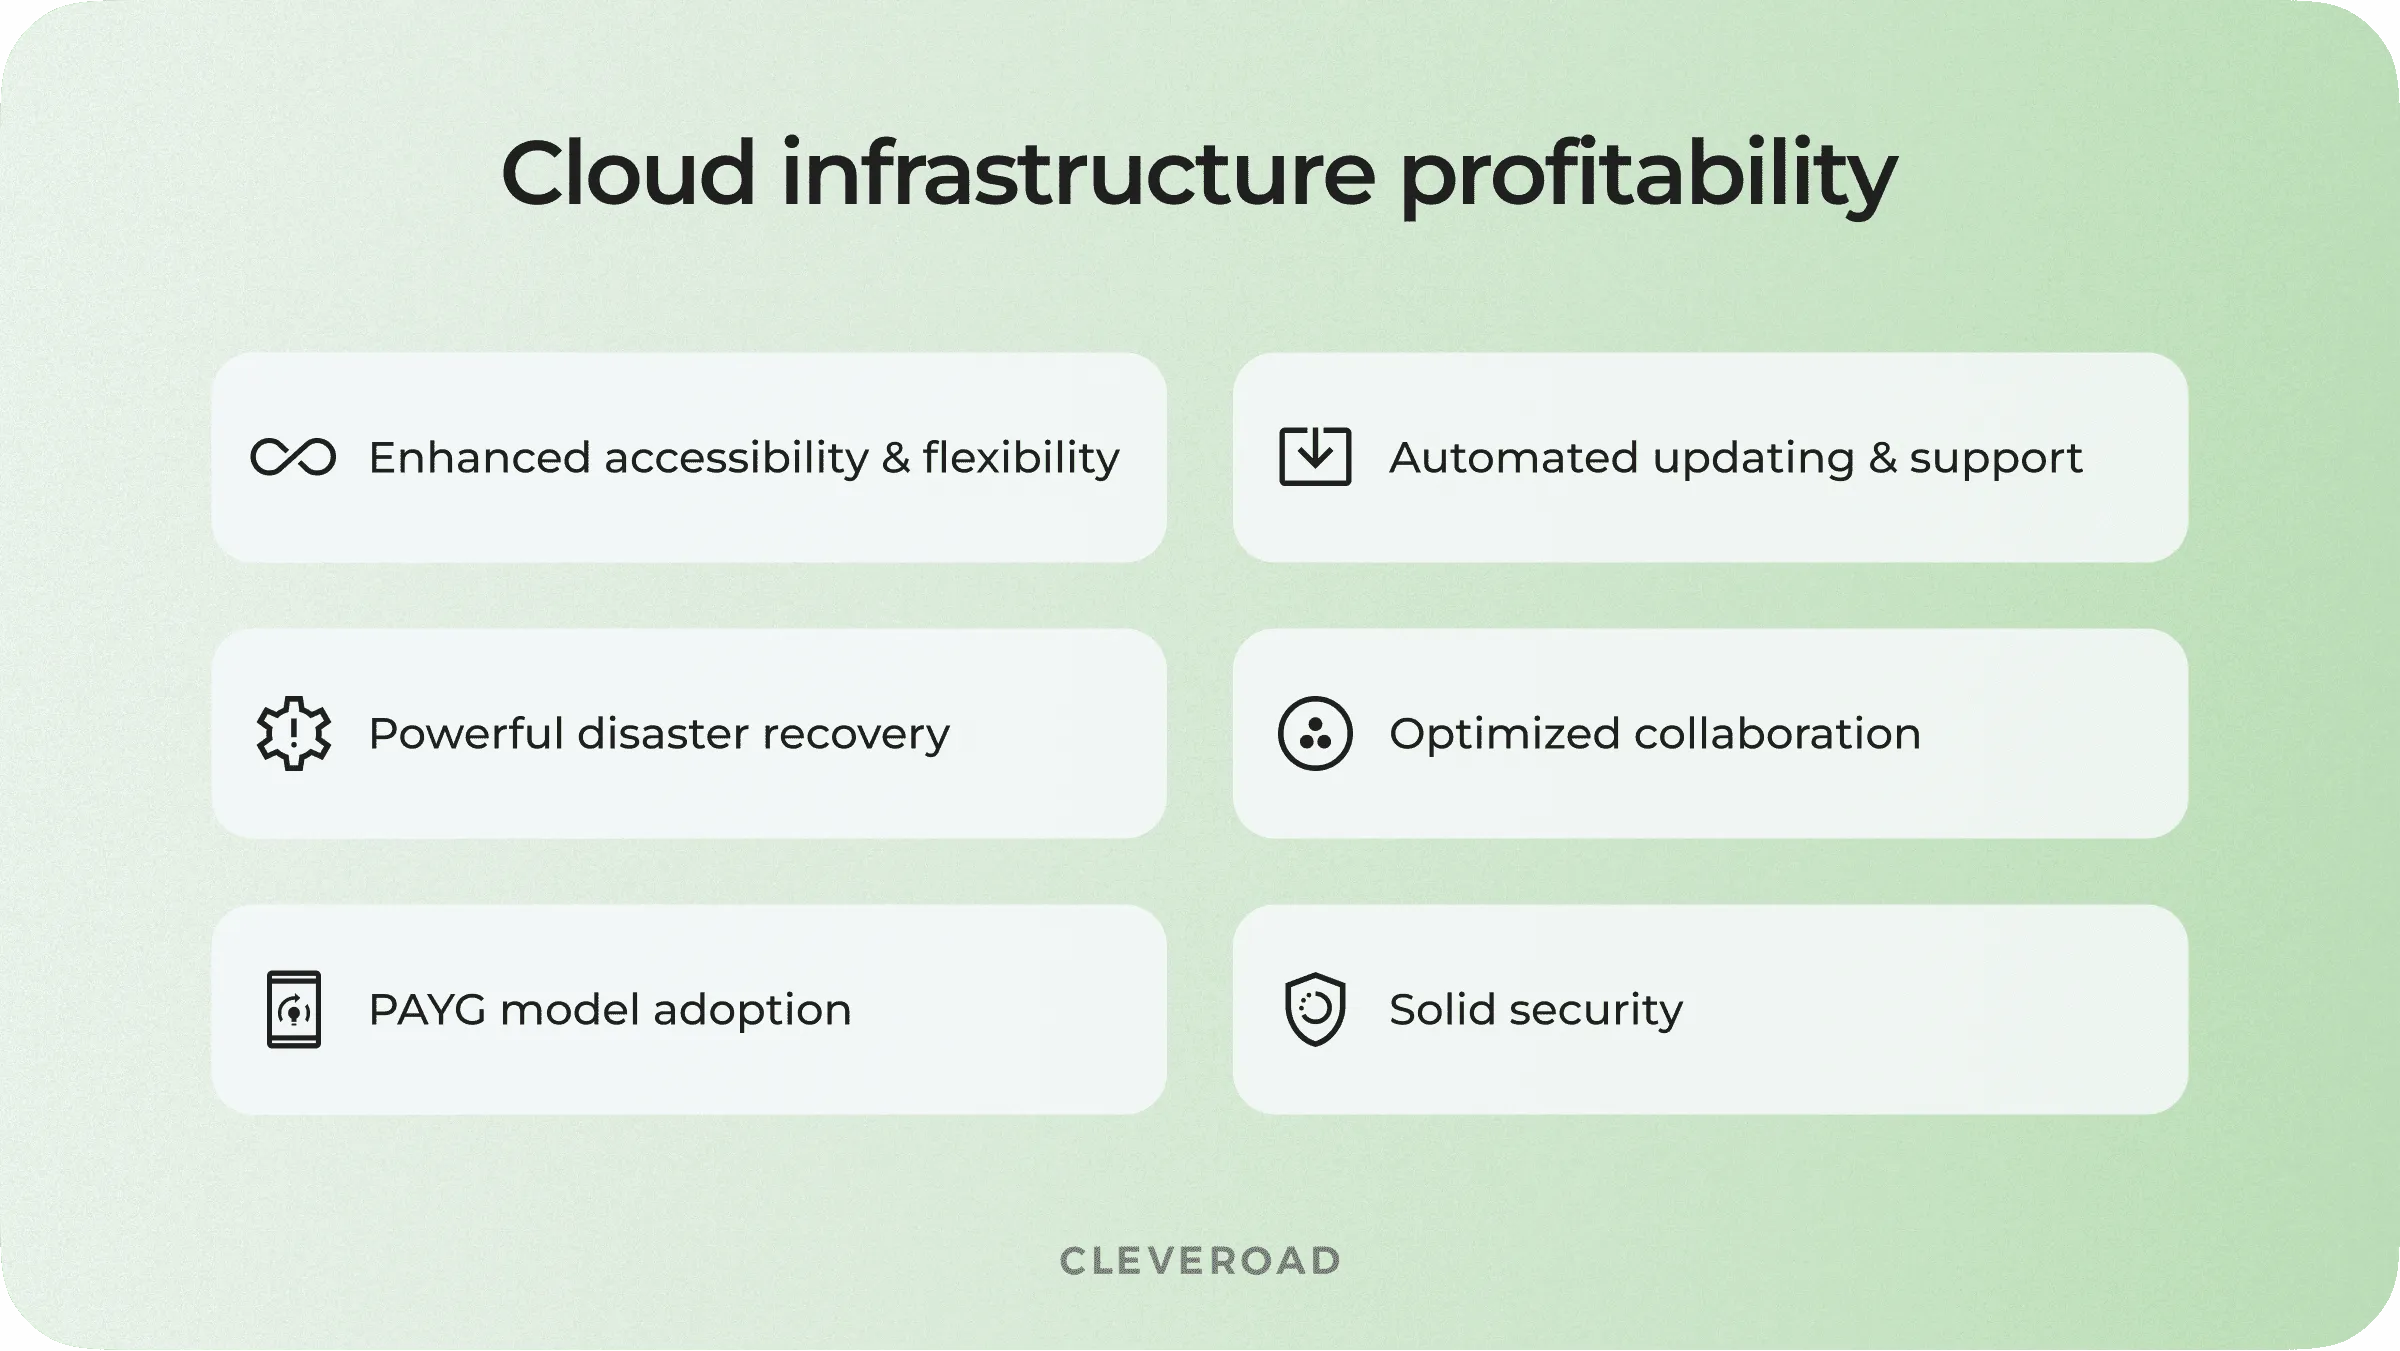 Cloud infrastructure profitability